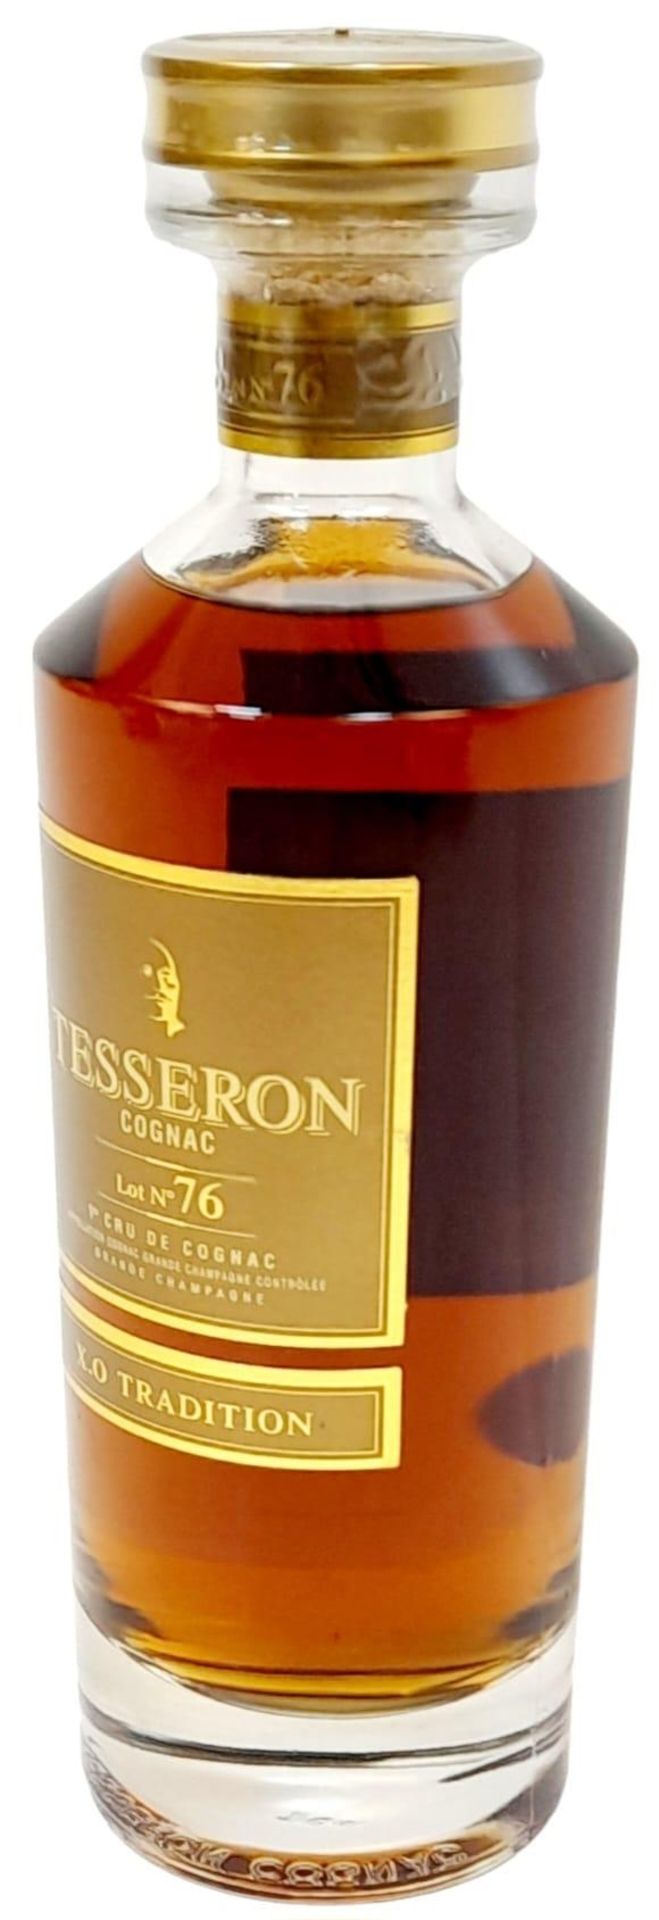 An Unopened, Sealed, Limited Edition Tesseron Cognac Lot No 76 1st Cru de Cognac XO Tradition. - Bild 2 aus 5